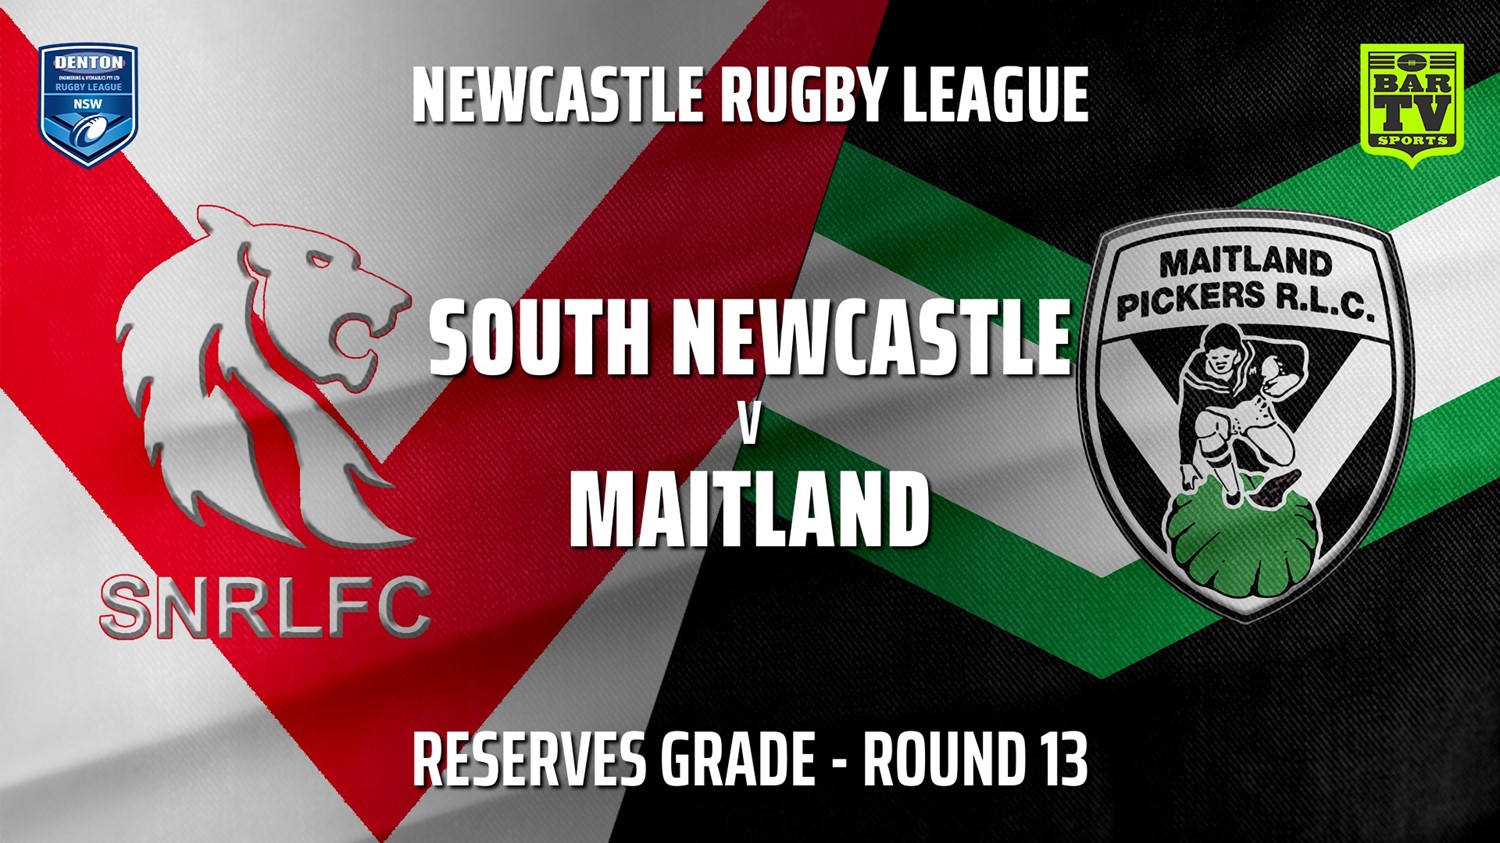 210704-Newcastle Round 13 - Reserves Grade - South Newcastle v Maitland Pickers Slate Image